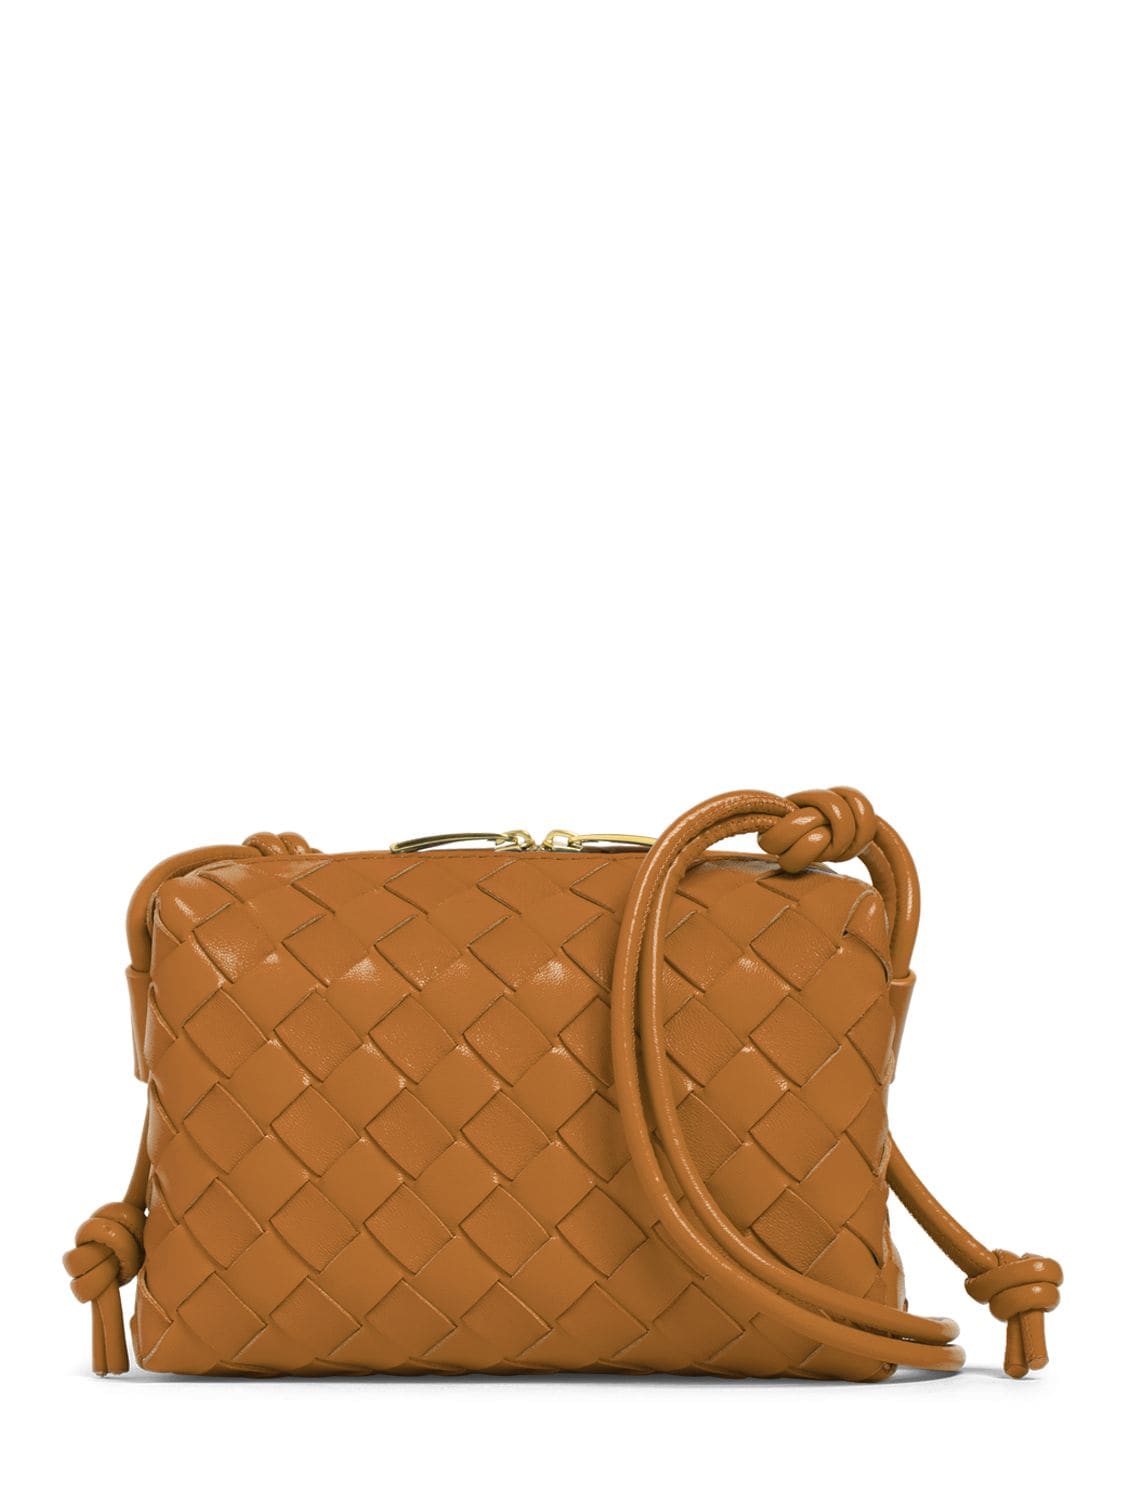 Bottega Veneta Women's Mini Loop Leather Shoulder Bag